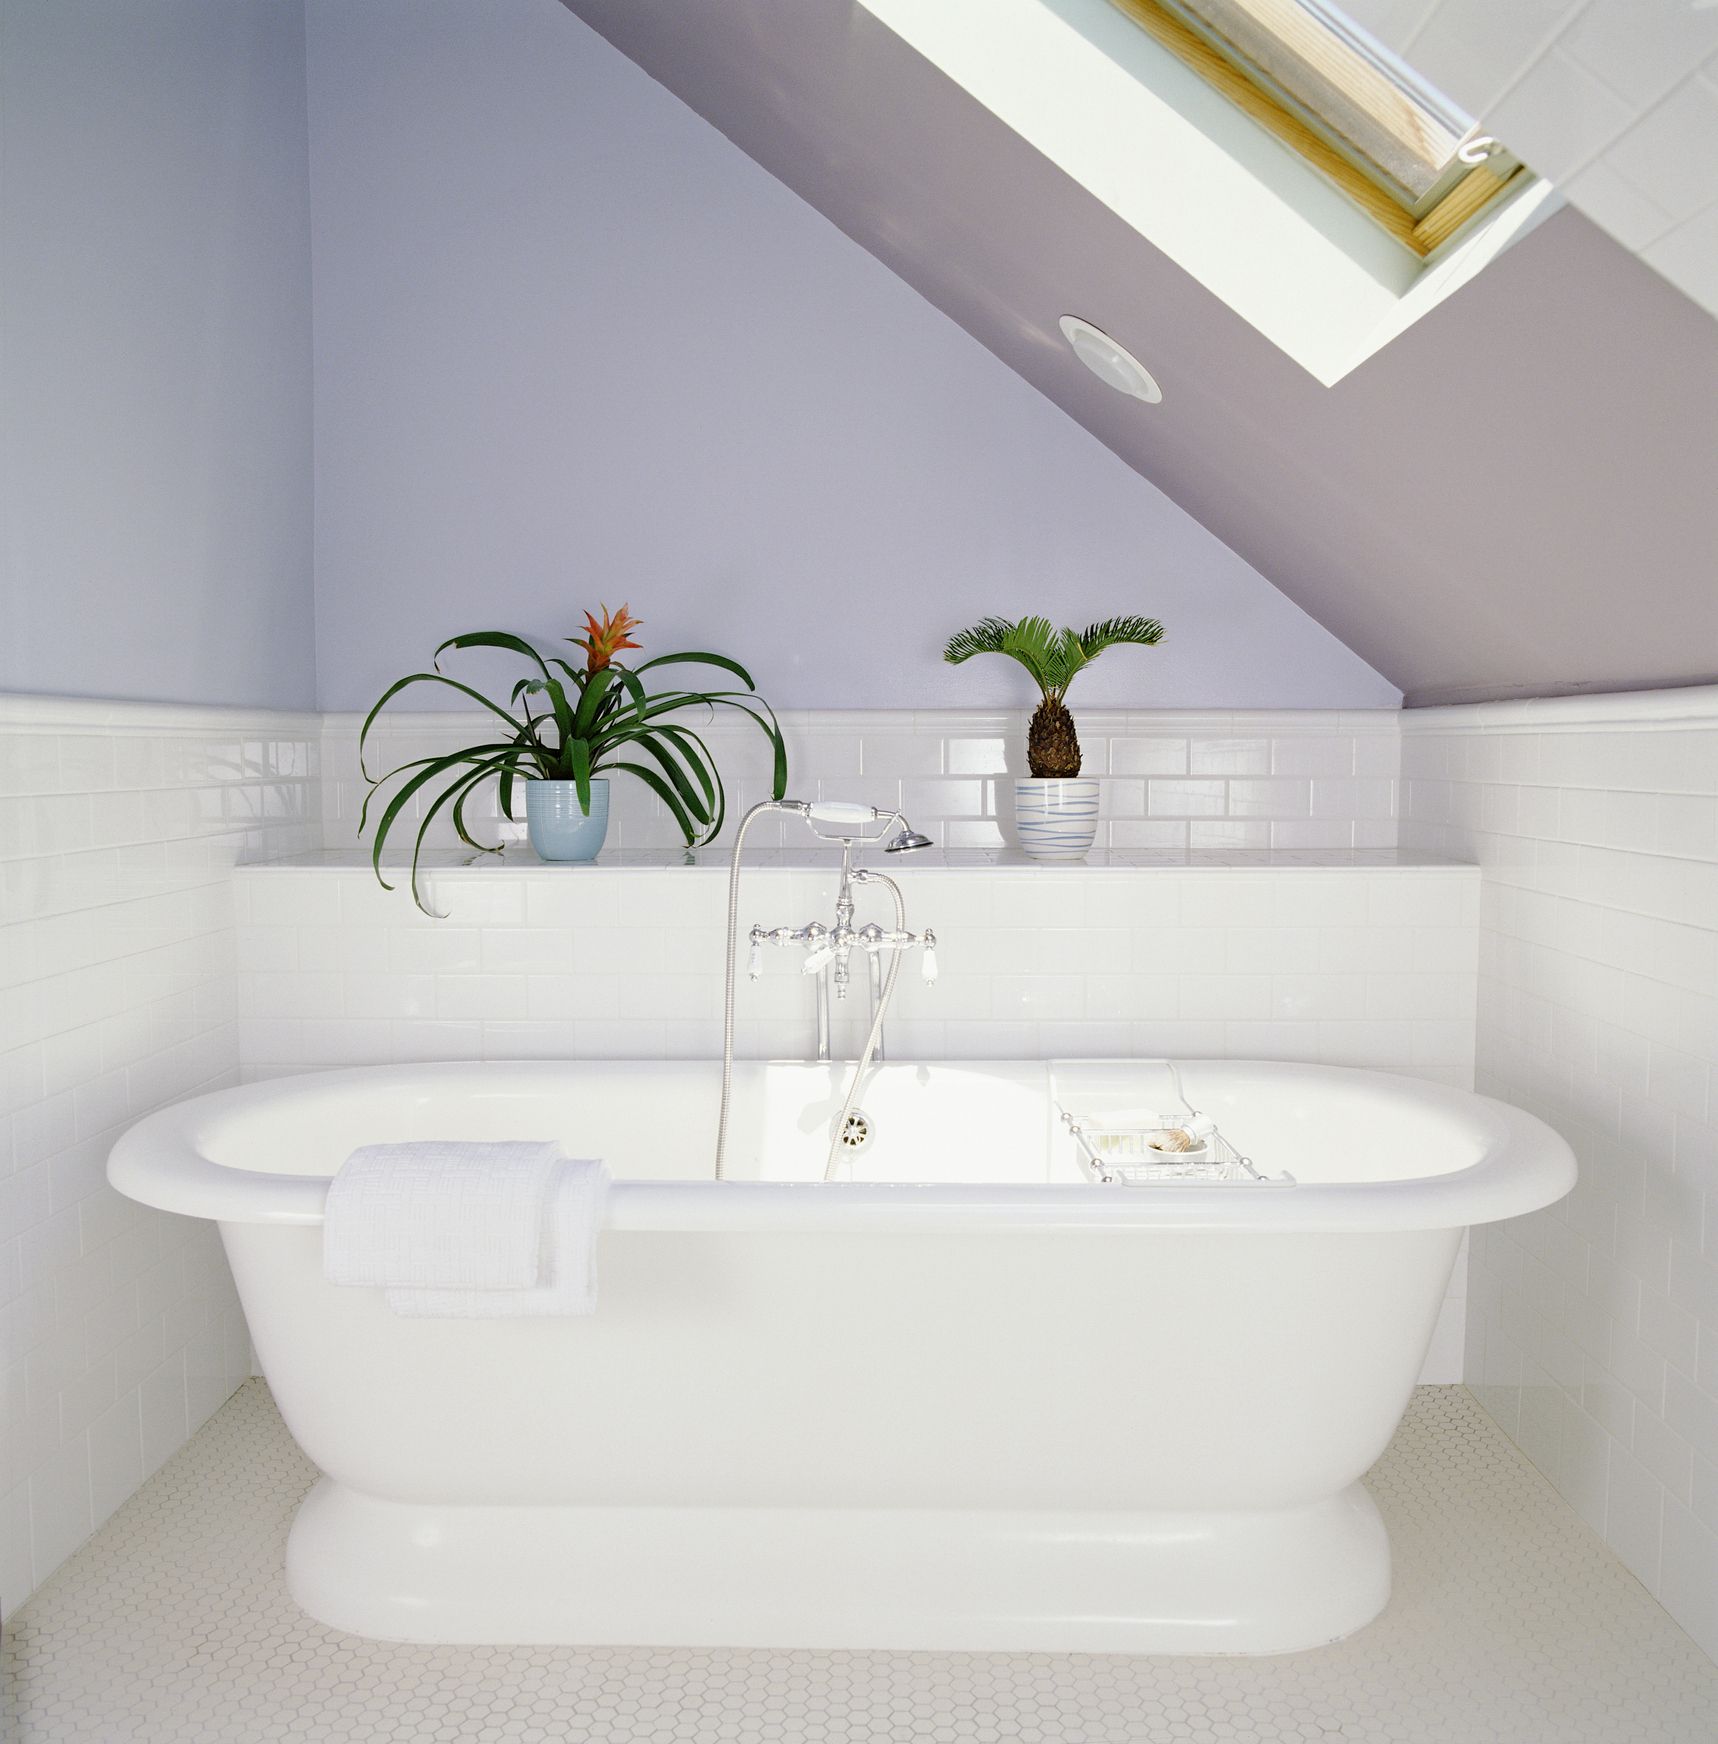 https://hips.hearstapps.com/hmg-prod/images/bathtub-under-skylight-in-attic-bathroom-lilac-purple-wall-1602384873.jpg